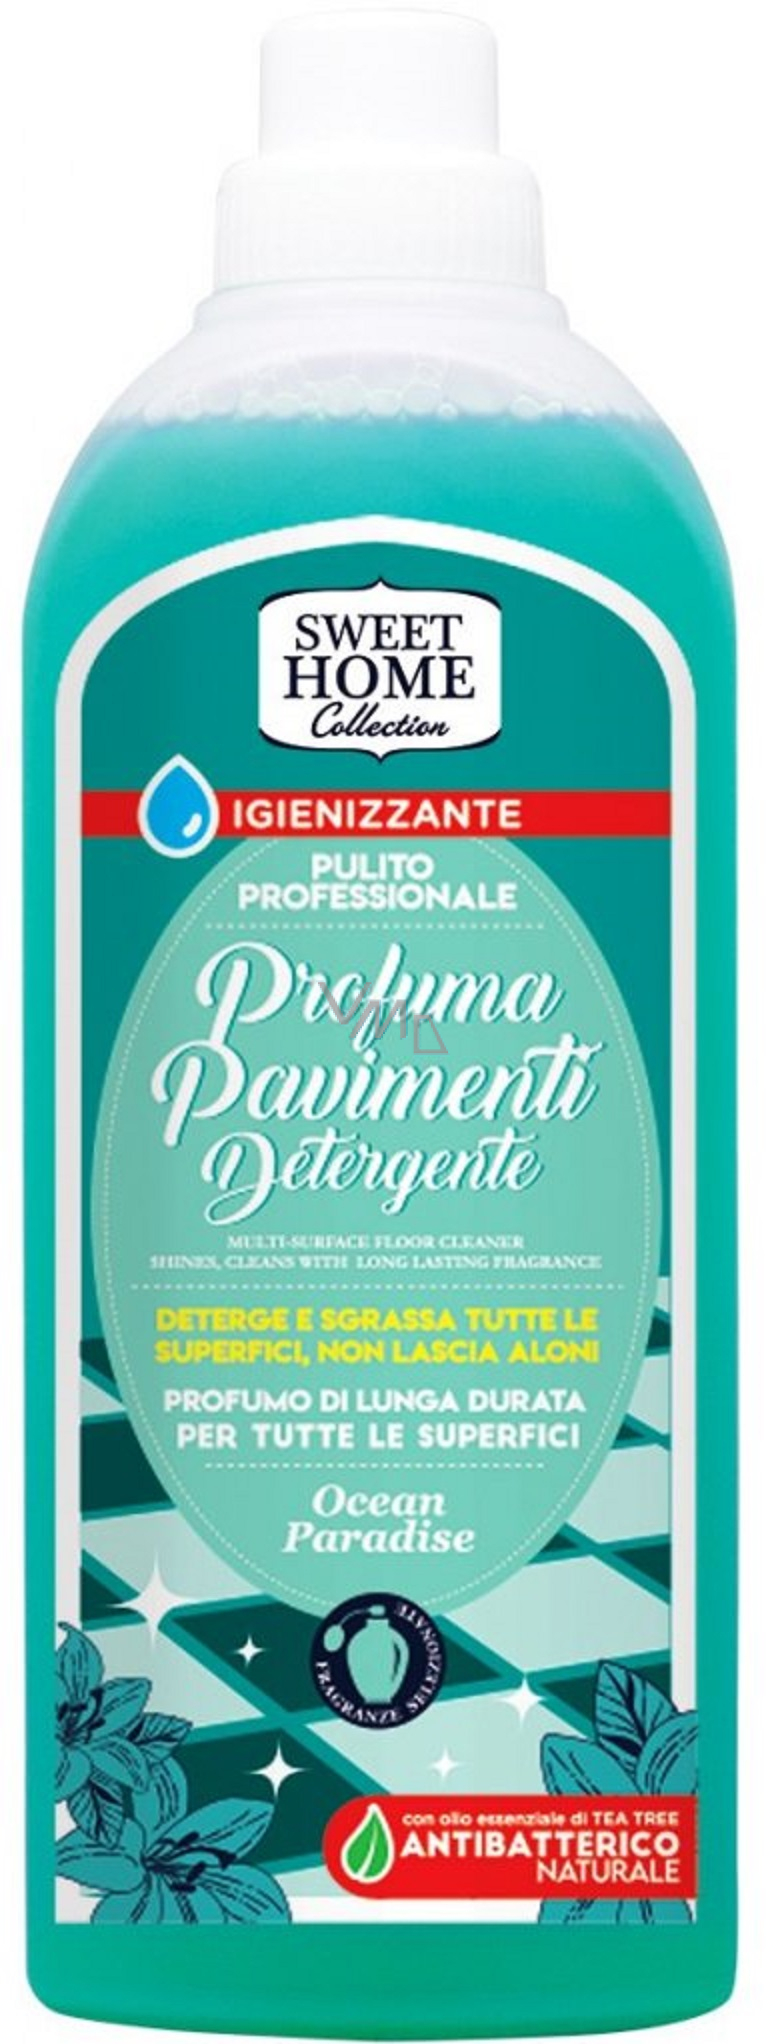 SWEET HOME - Fresco Cotone - Profuma Biancheria 250 Ml